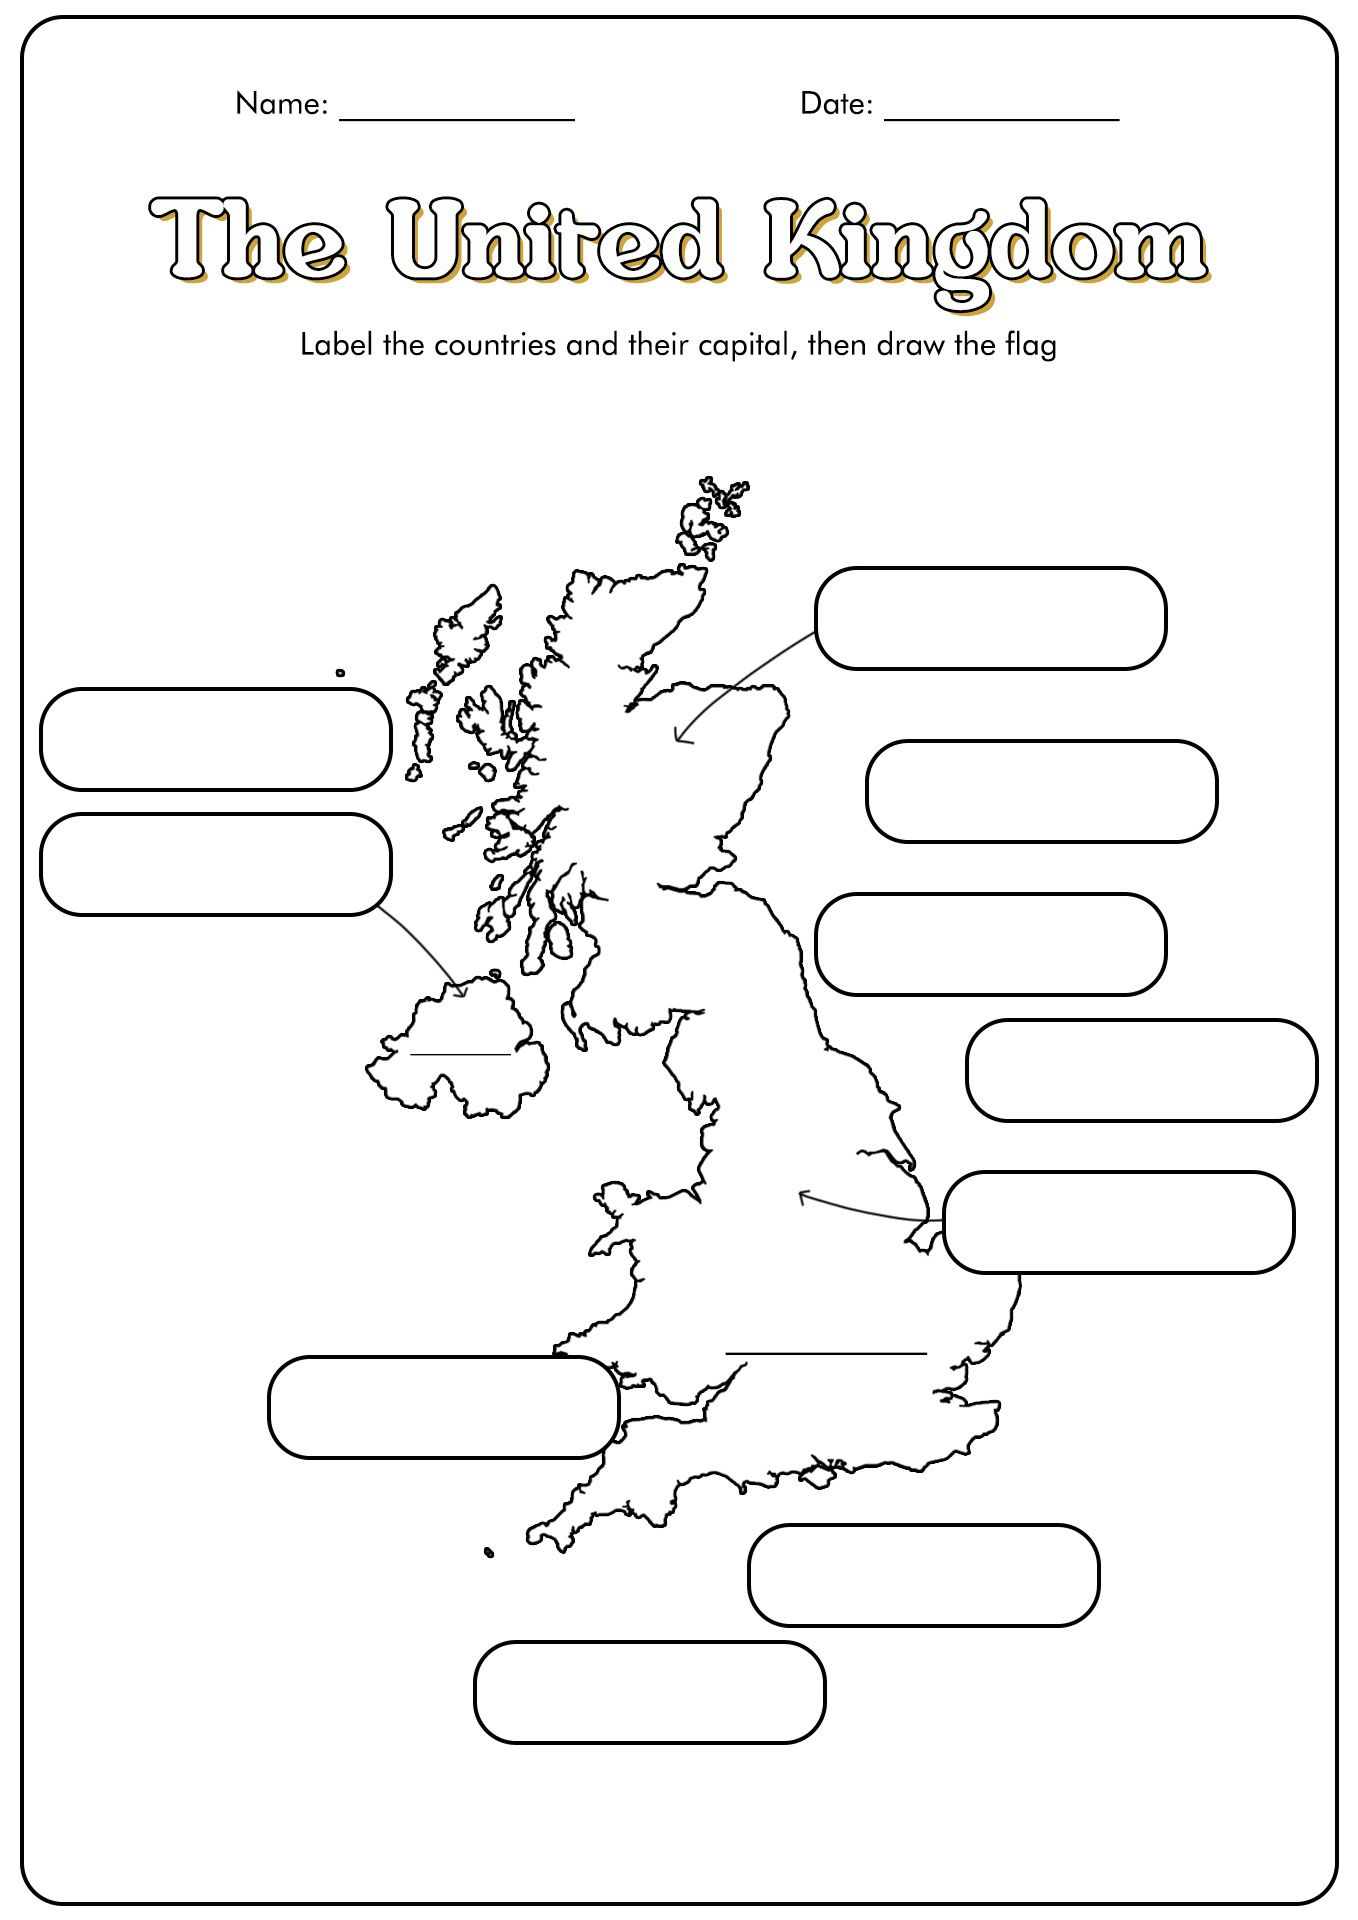 Paper Ideas The United Kingdom Image